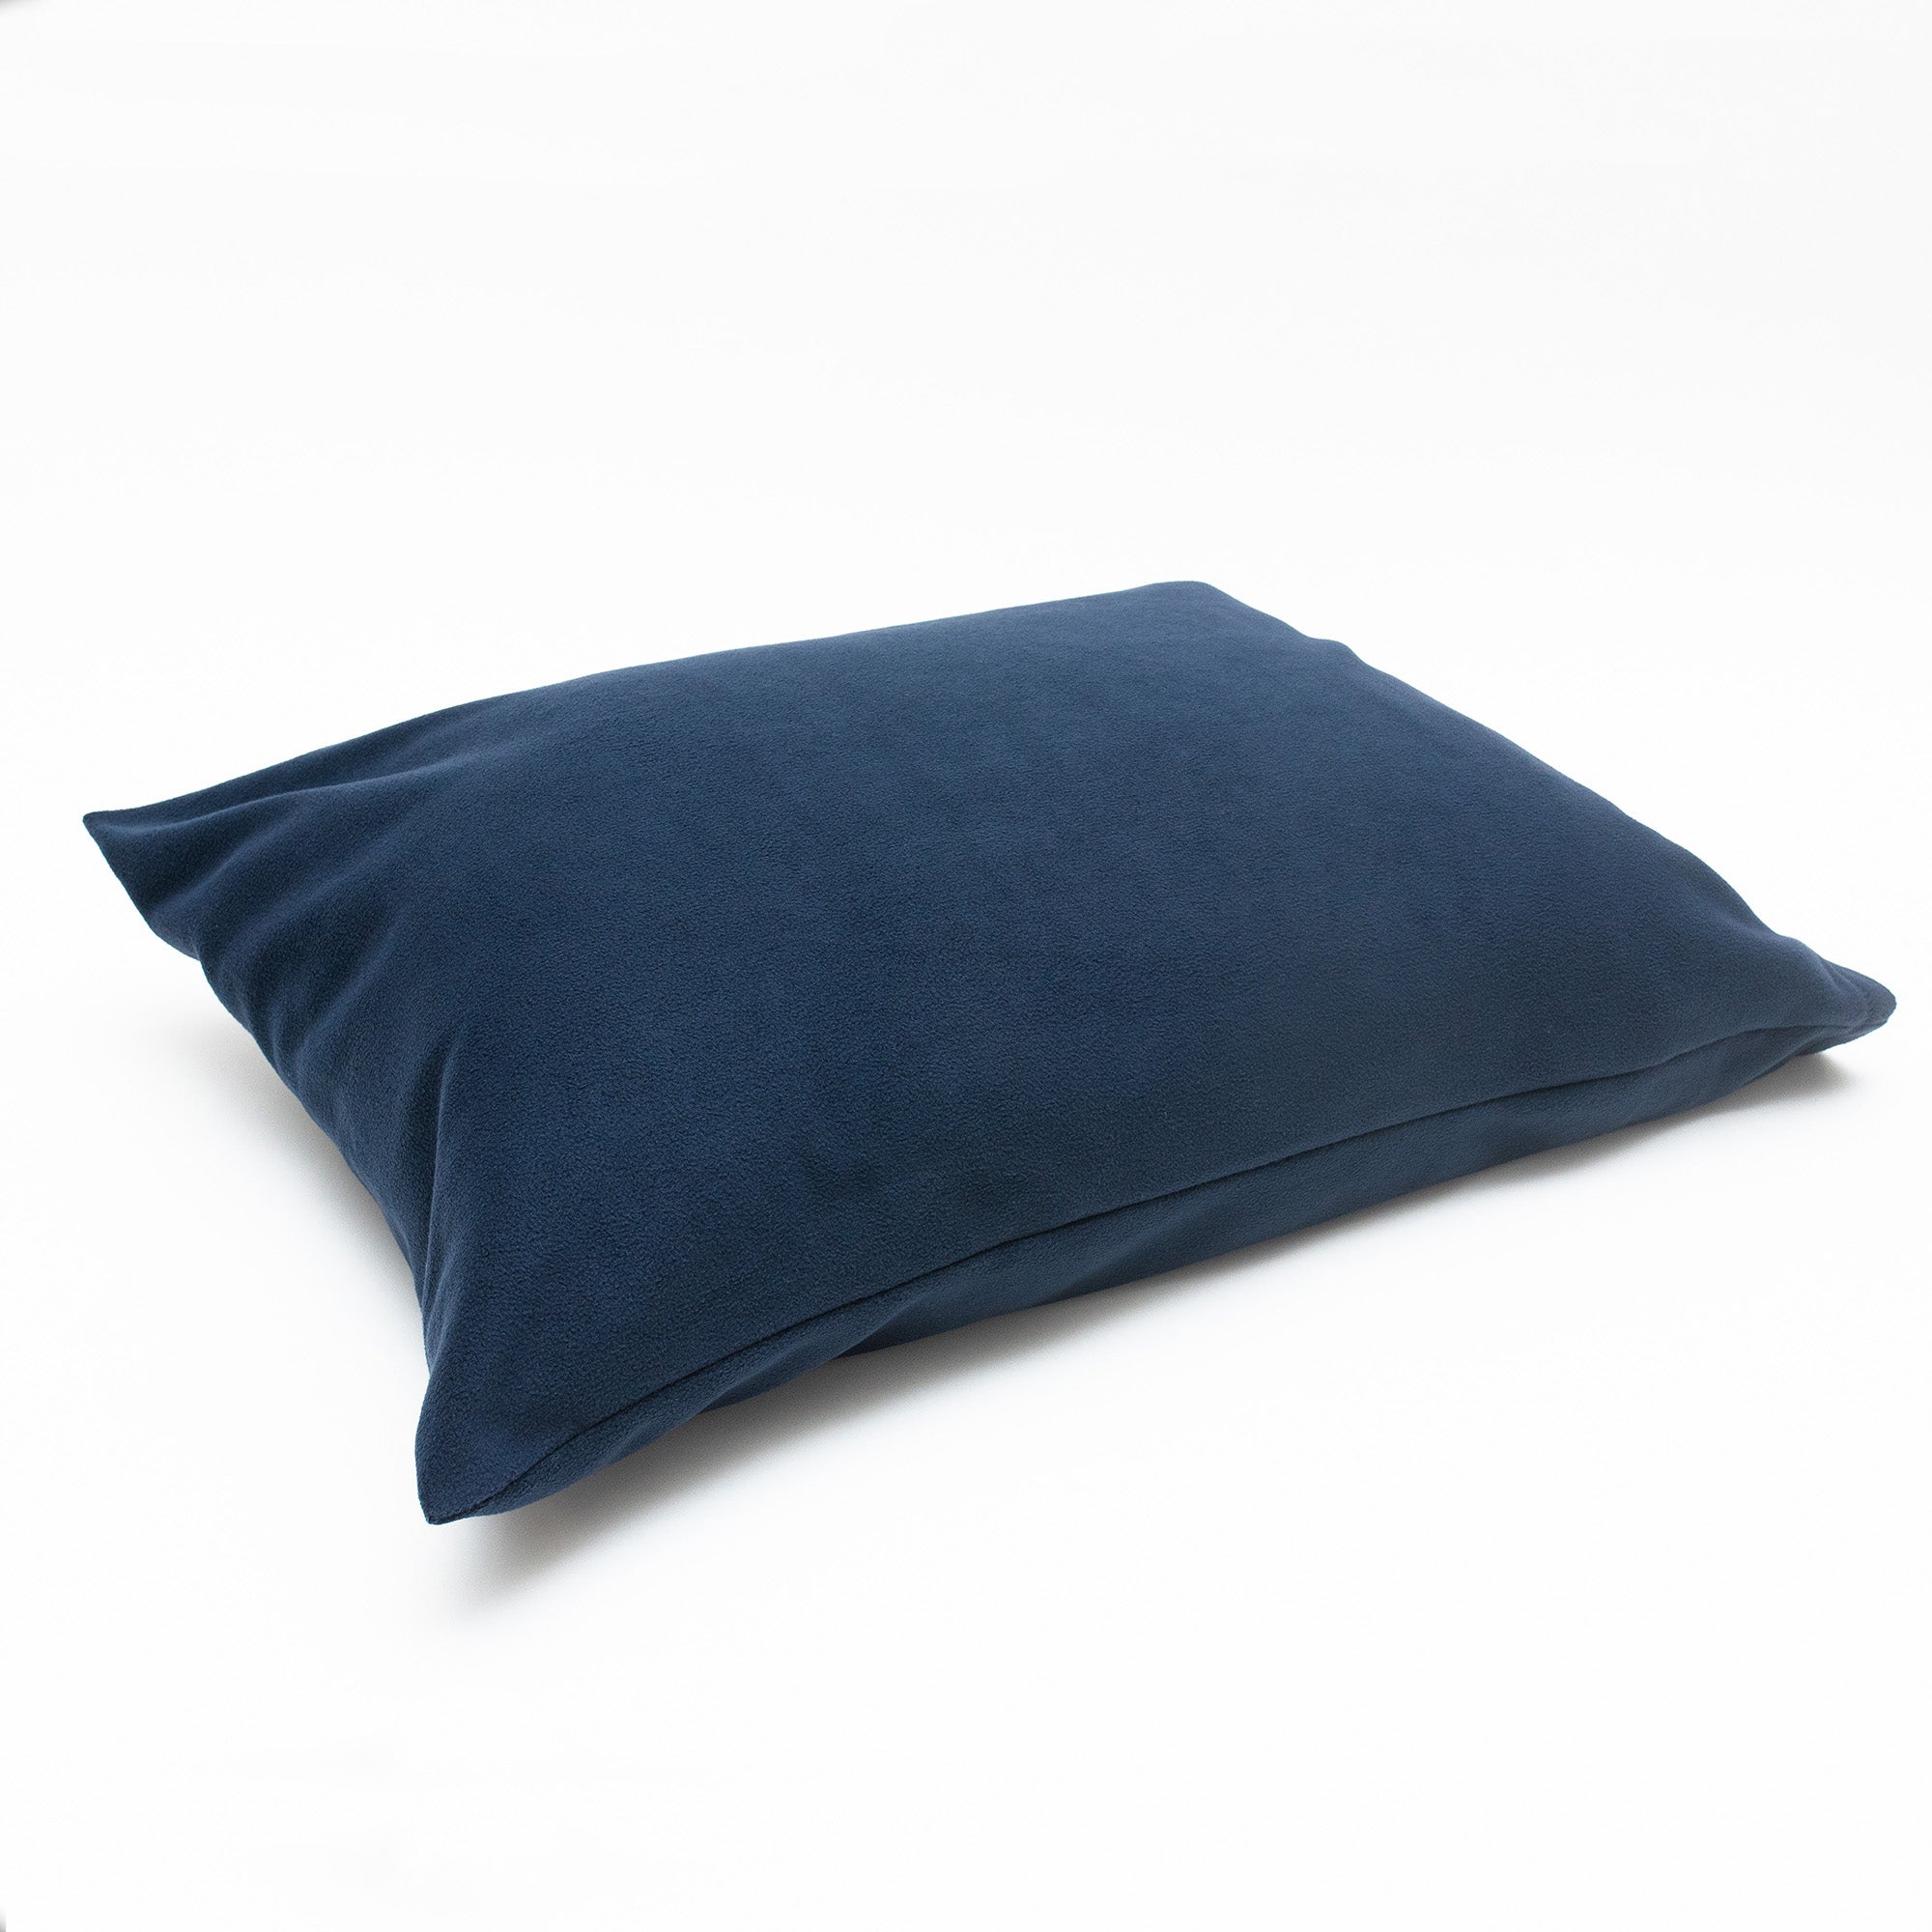 Blue Fleece Pillow Case with Pillow - Fleece Pillowcase - Peaceful Touch - American Blanket Company